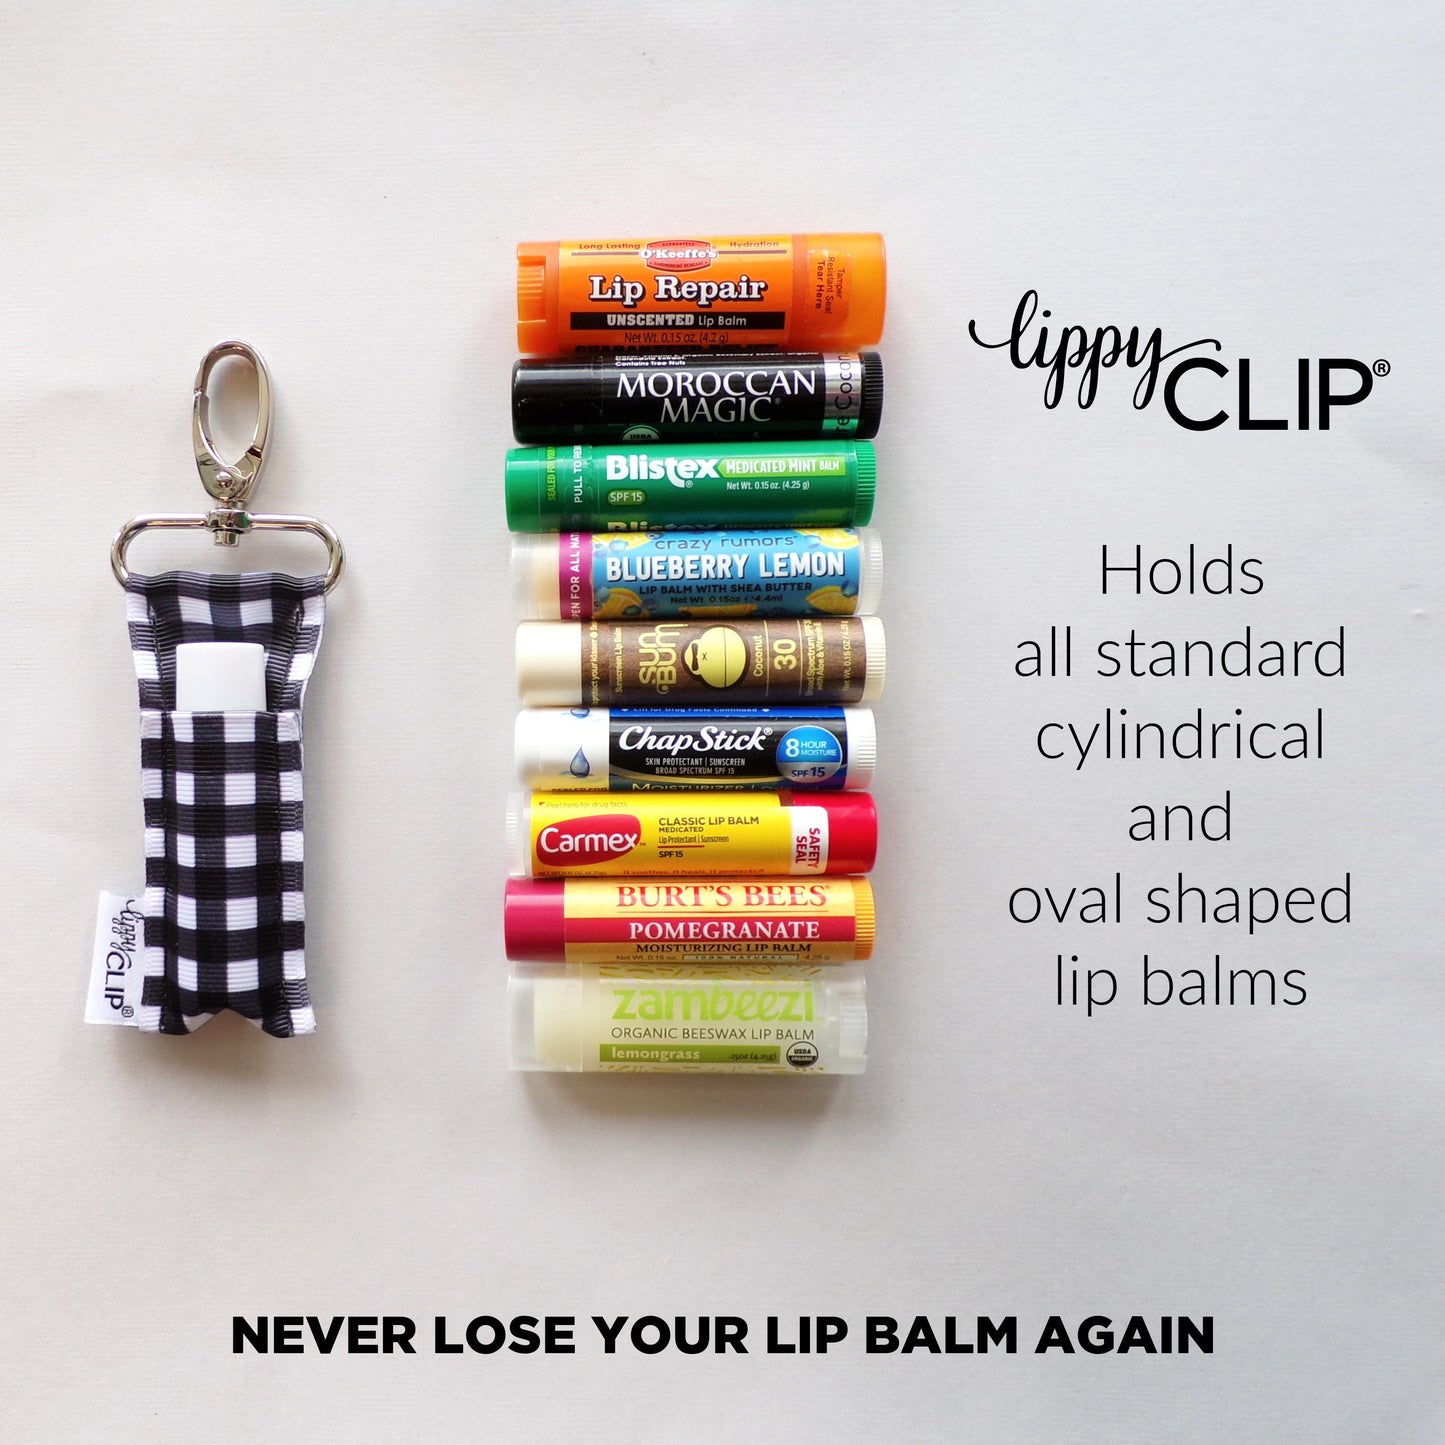 Dogs Galore LippyClip® Lip Balm Holder